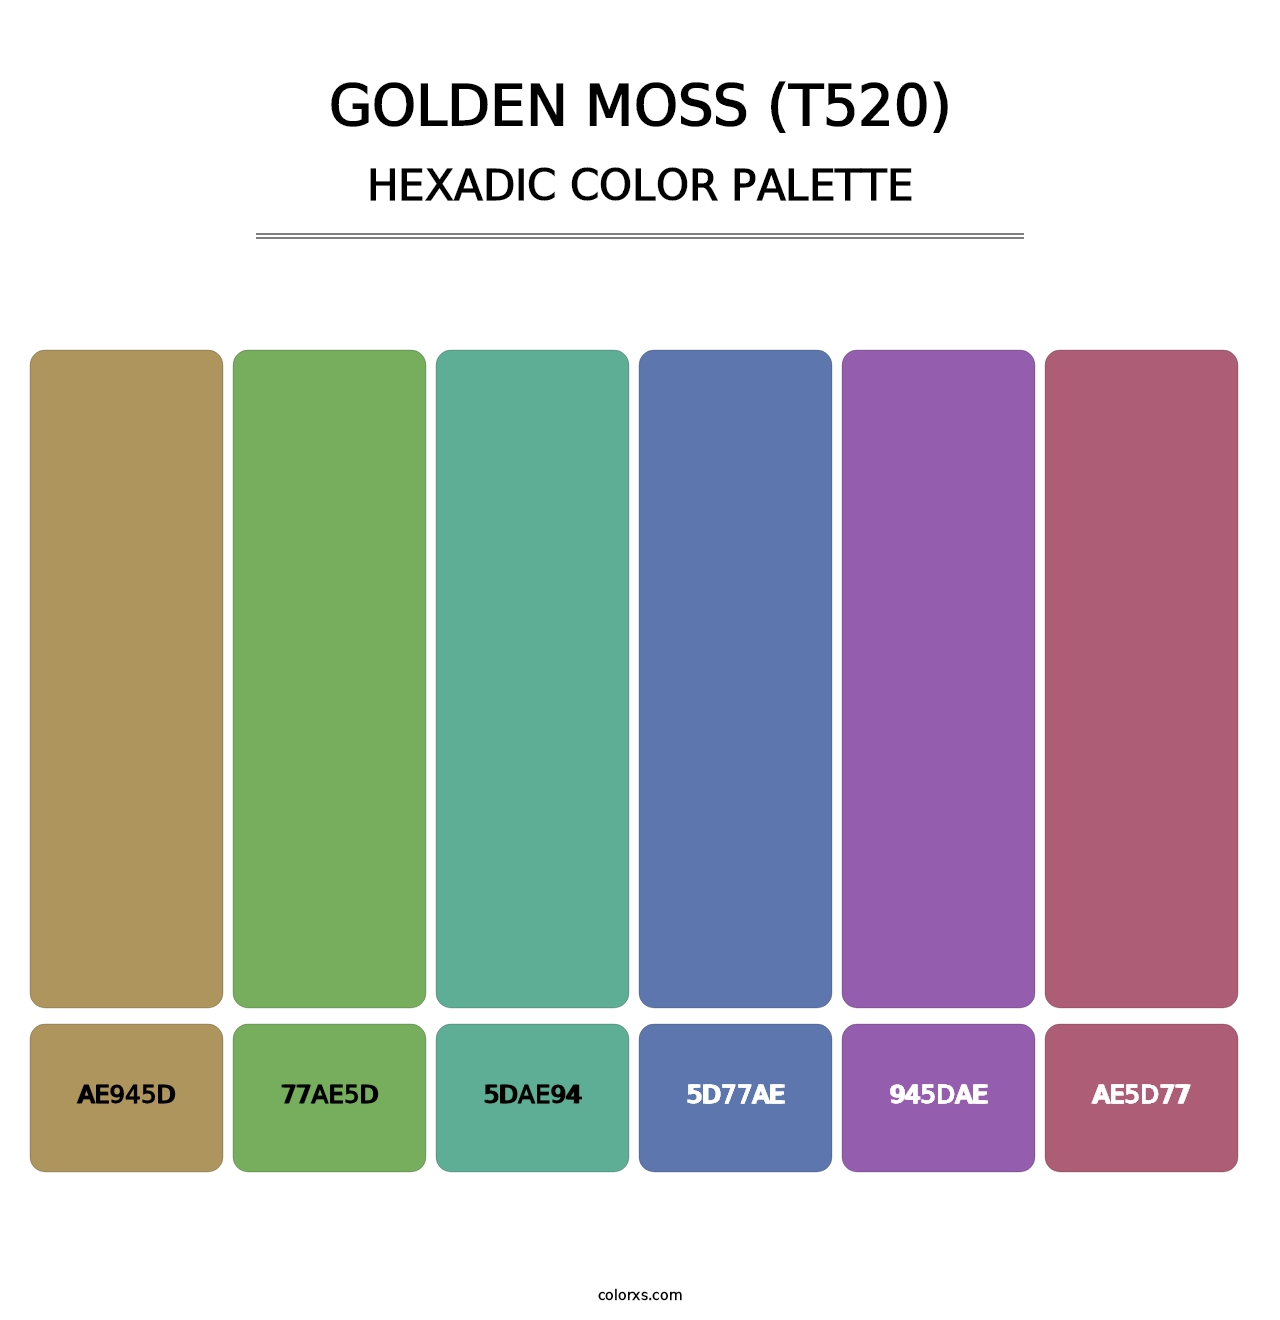 Golden Moss (T520) - Hexadic Color Palette